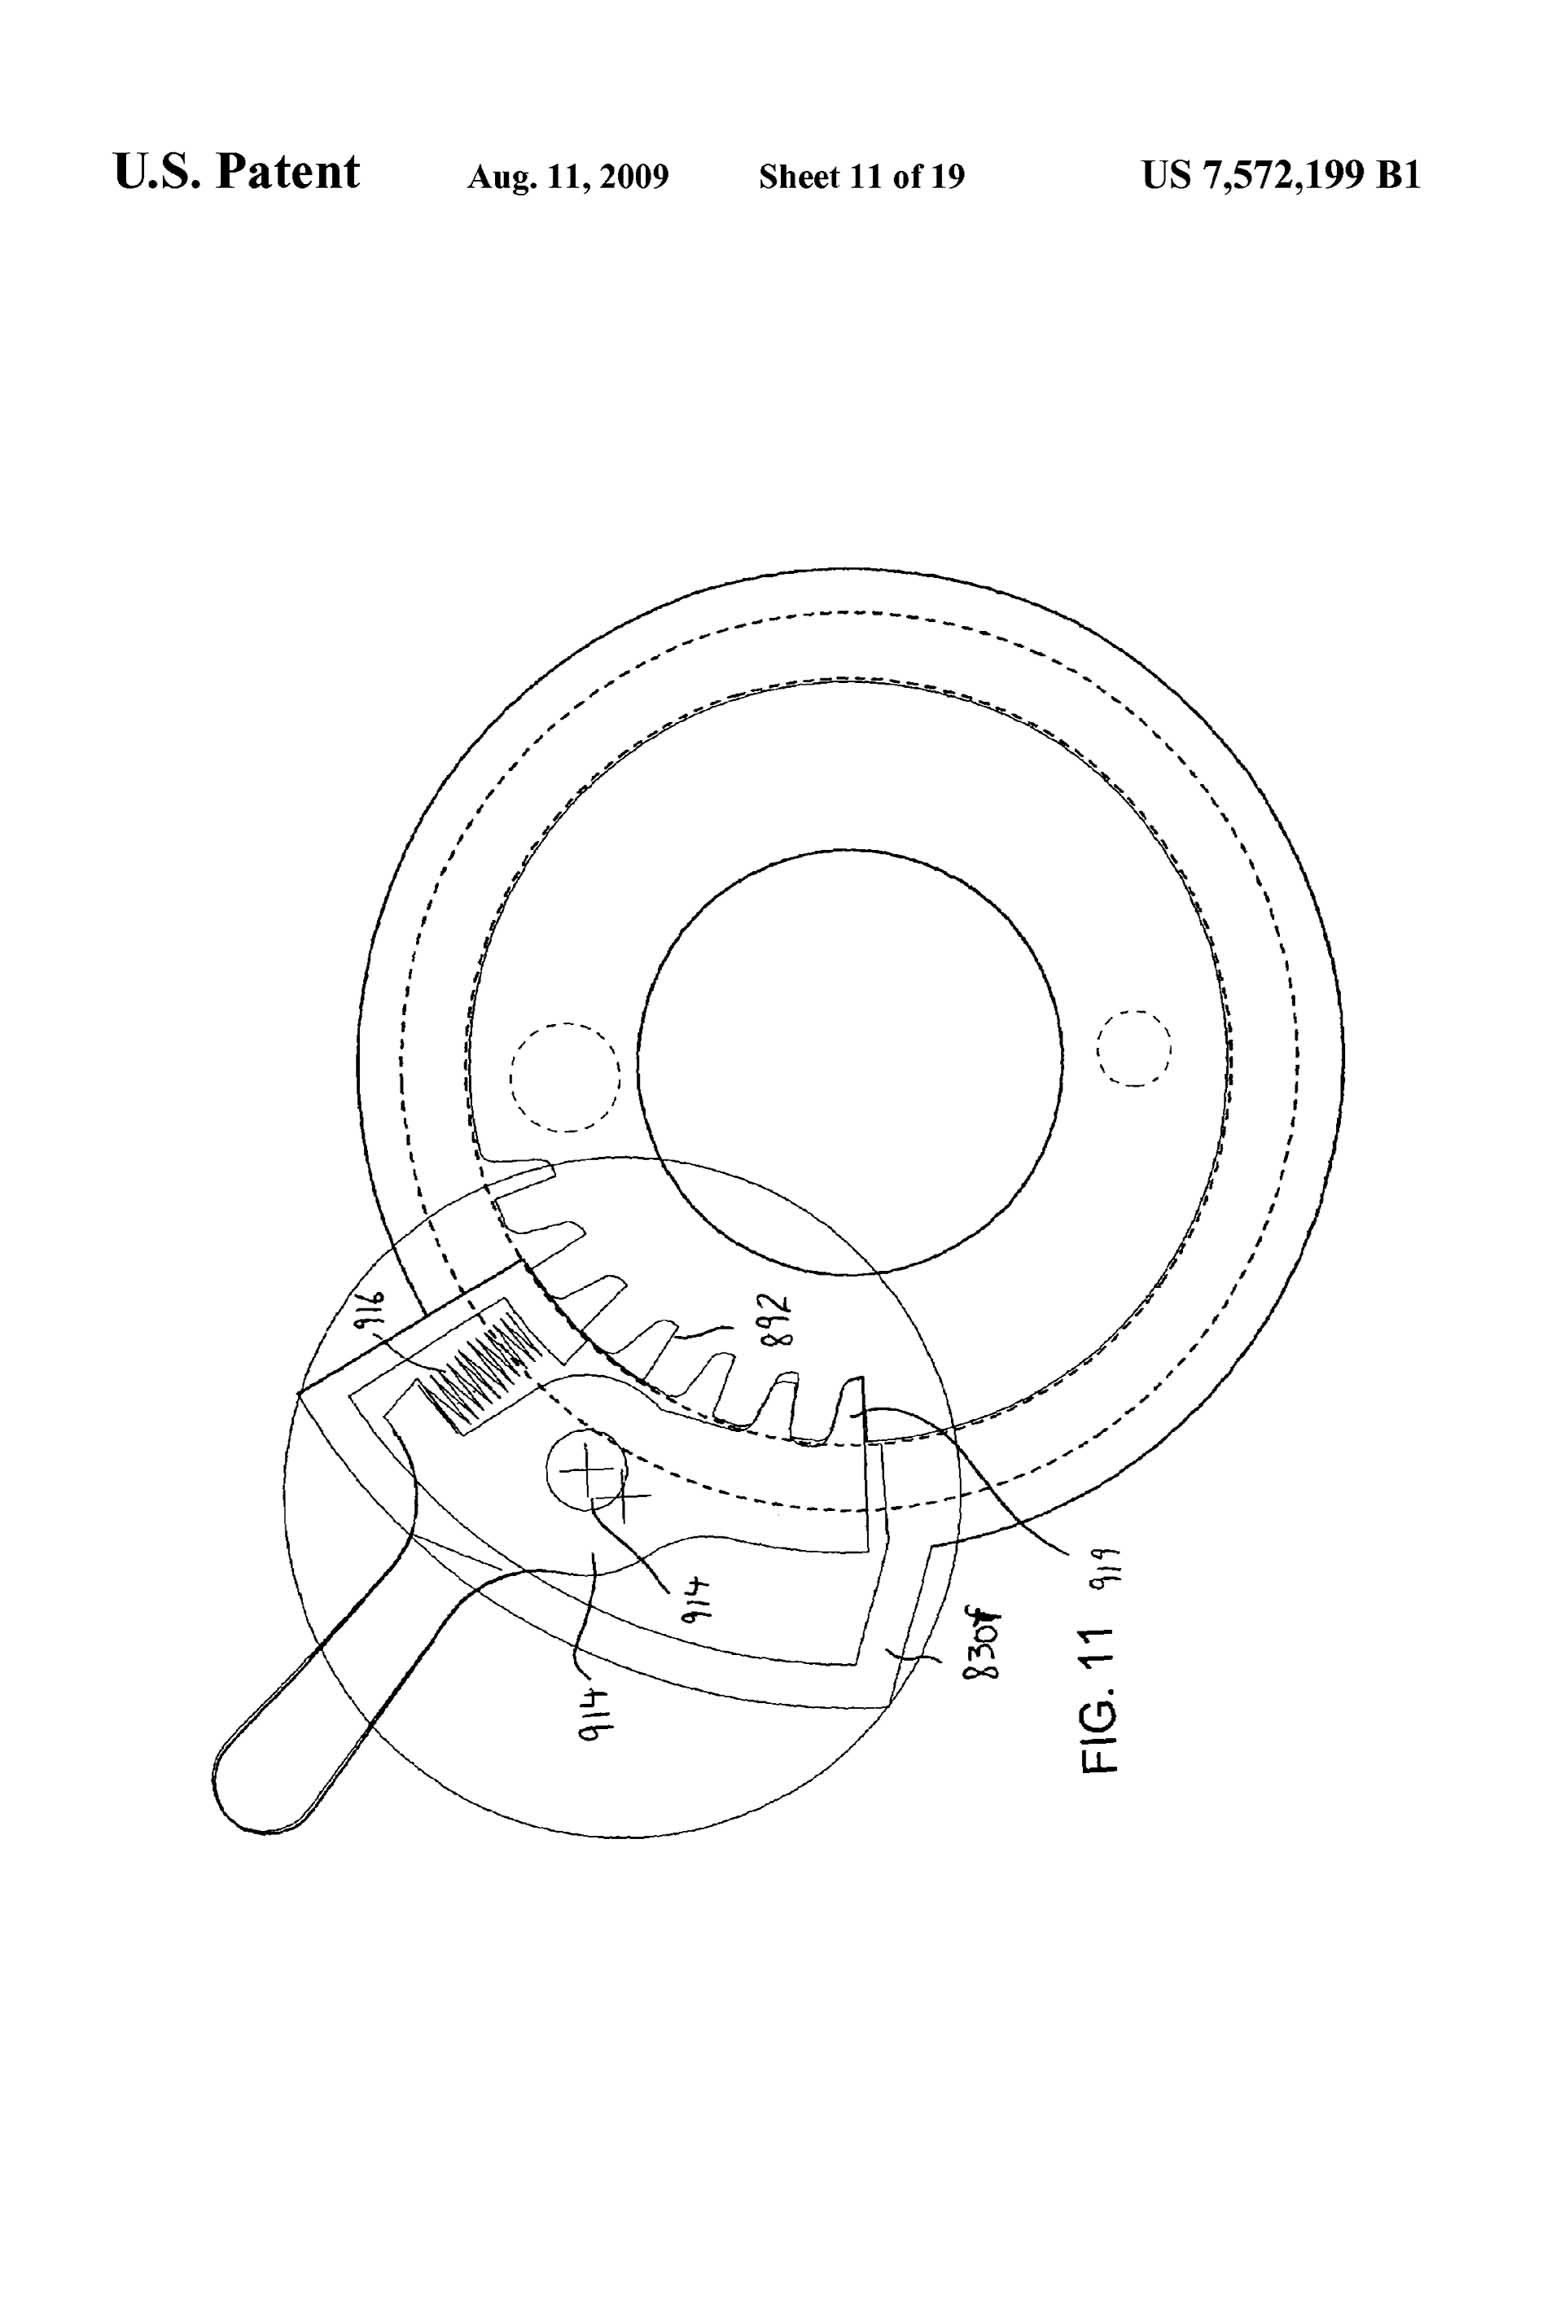 US Patent 7,572,199 - Vivo scan 21 main image